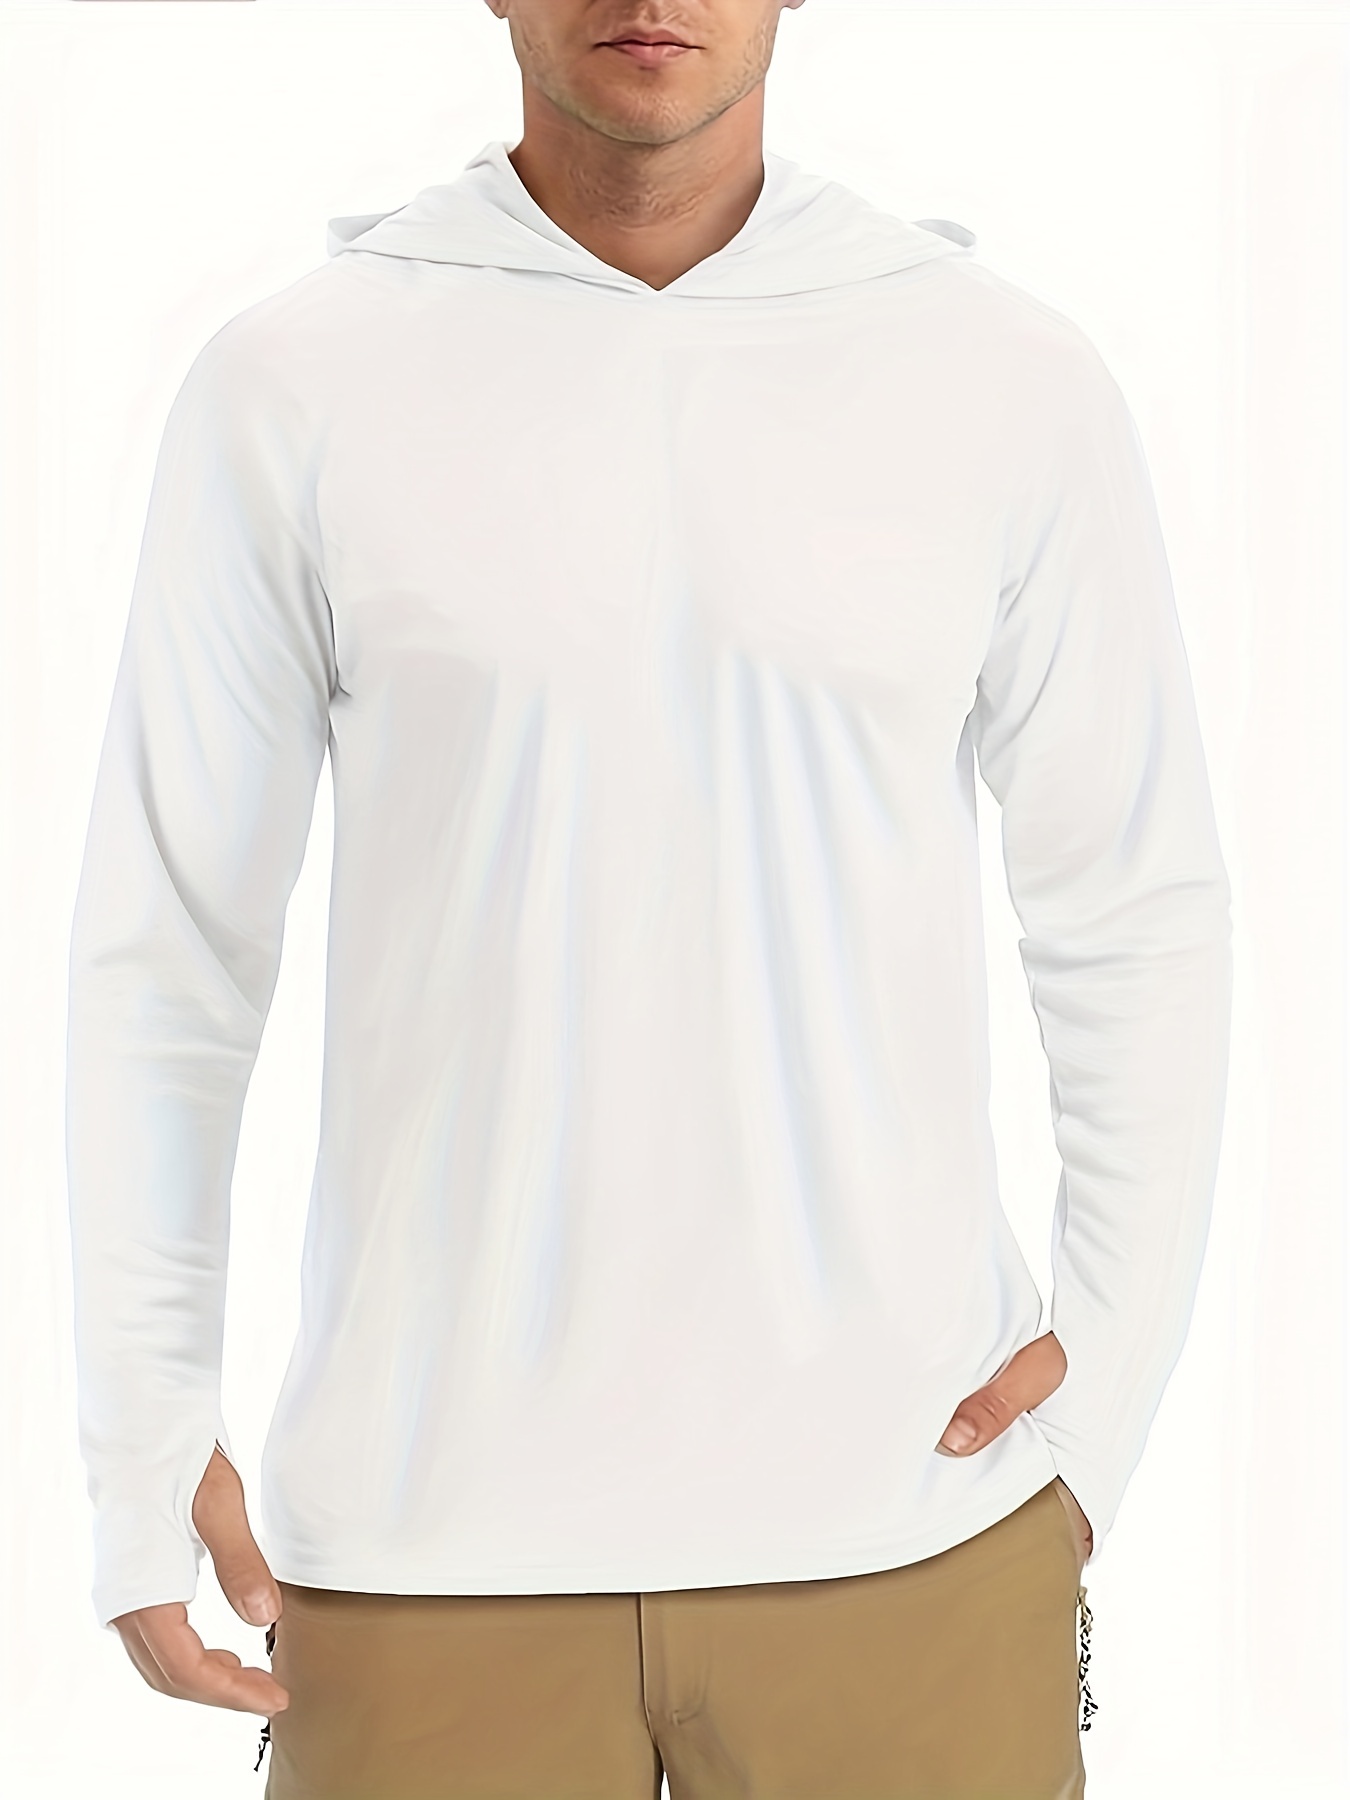 TAIAOJING Men's Fashion T-Shirts Large Short Sleeve Layered Style